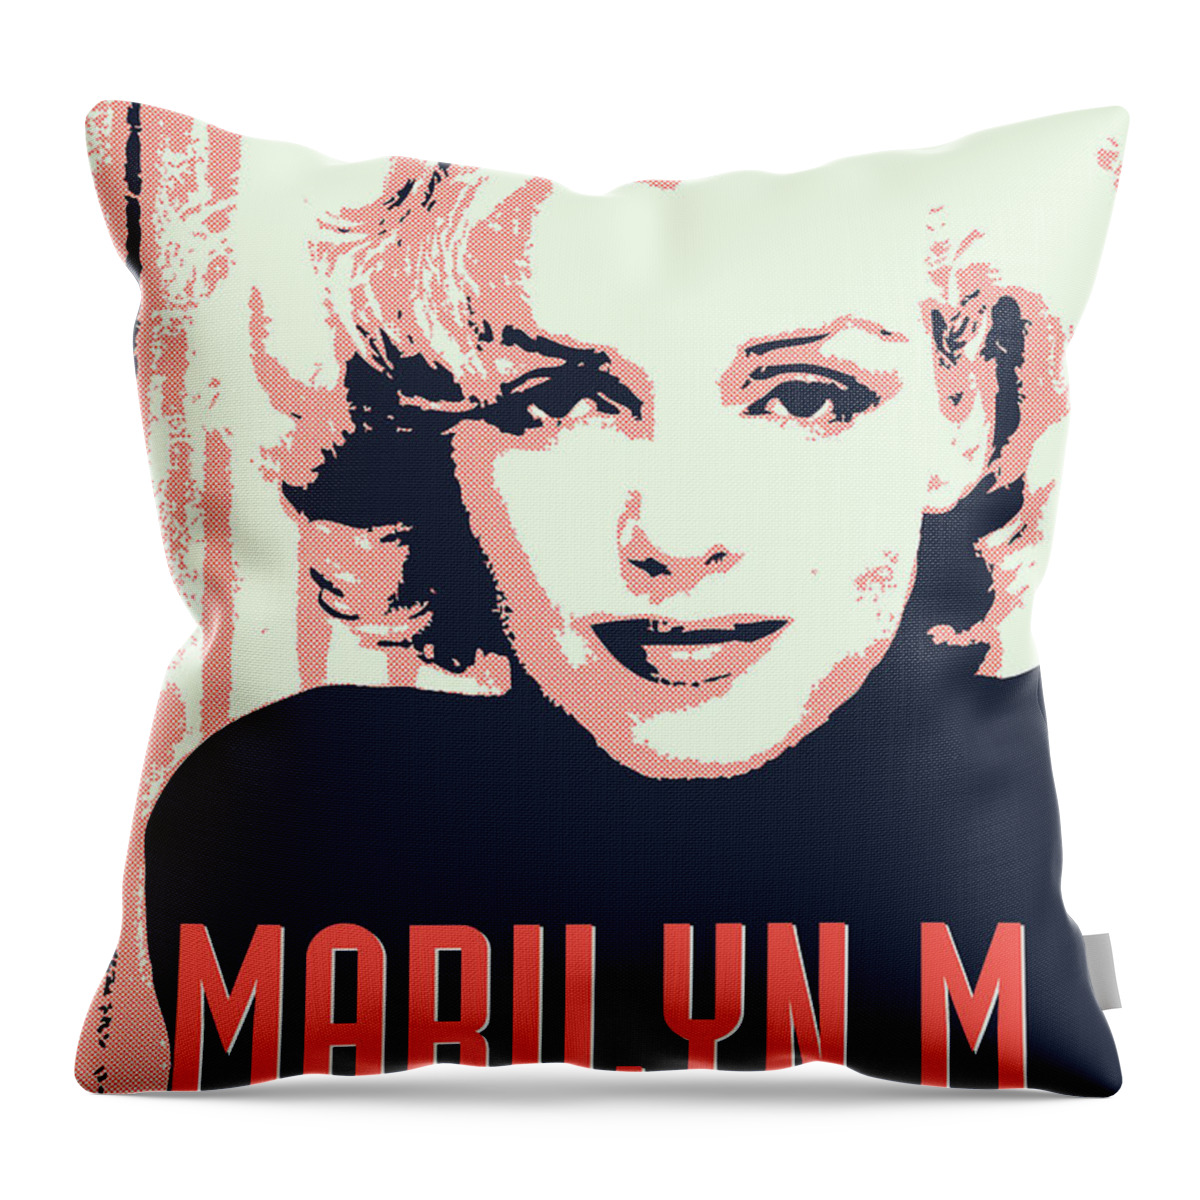 Claudia Throw Pillow featuring the digital art Marilyn M by Chungkong Art